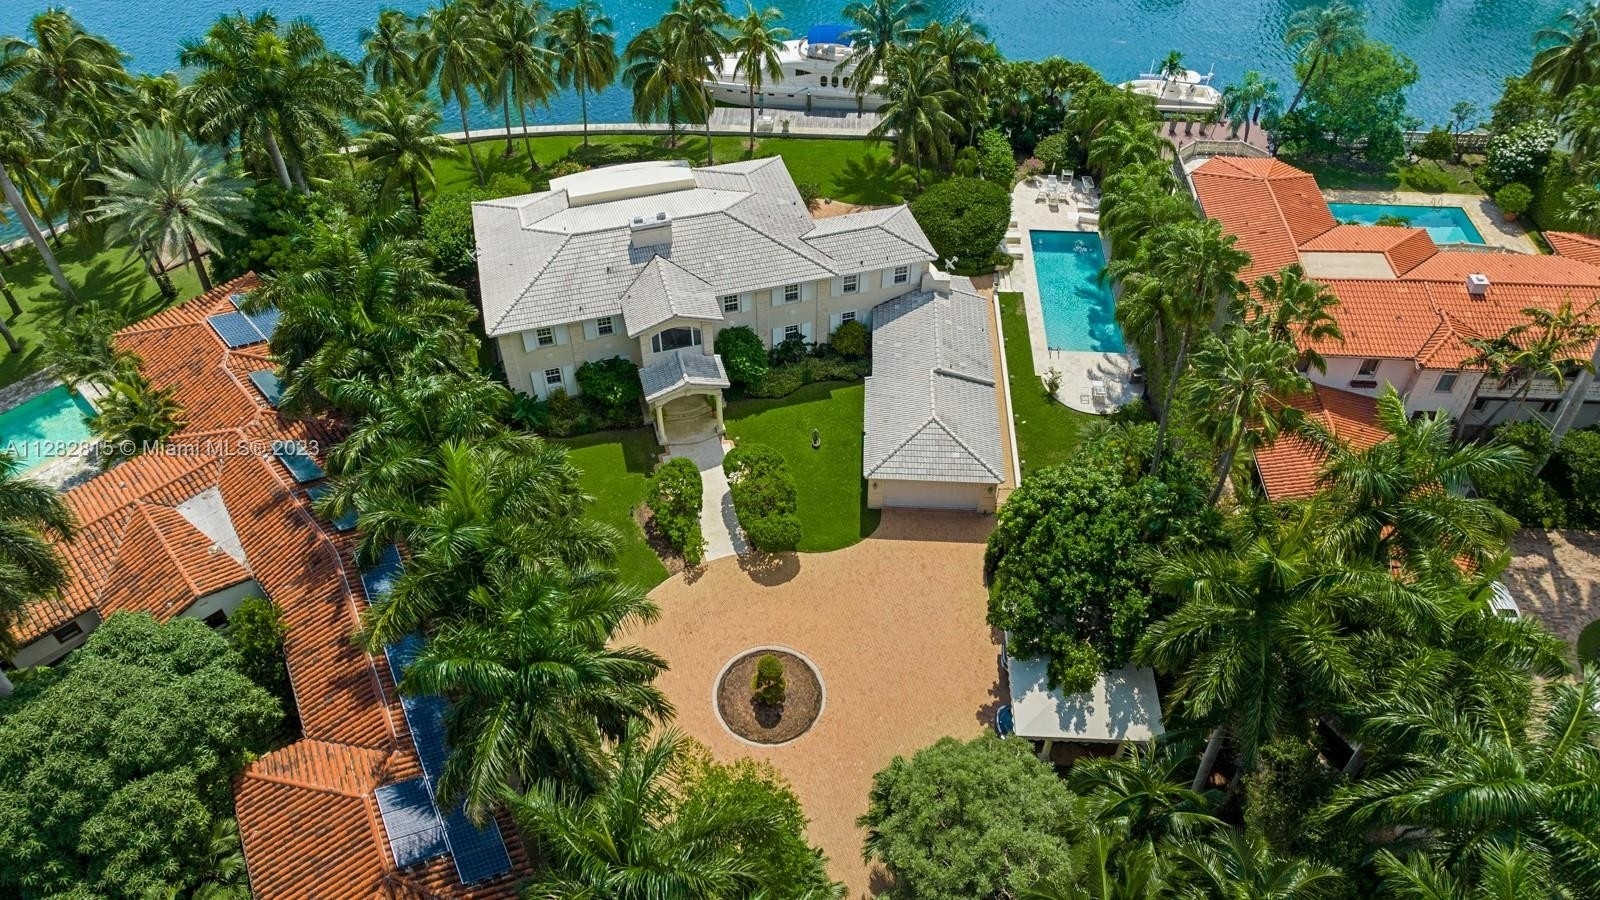 Property at Bayshore, Miami Beach, FL 33140